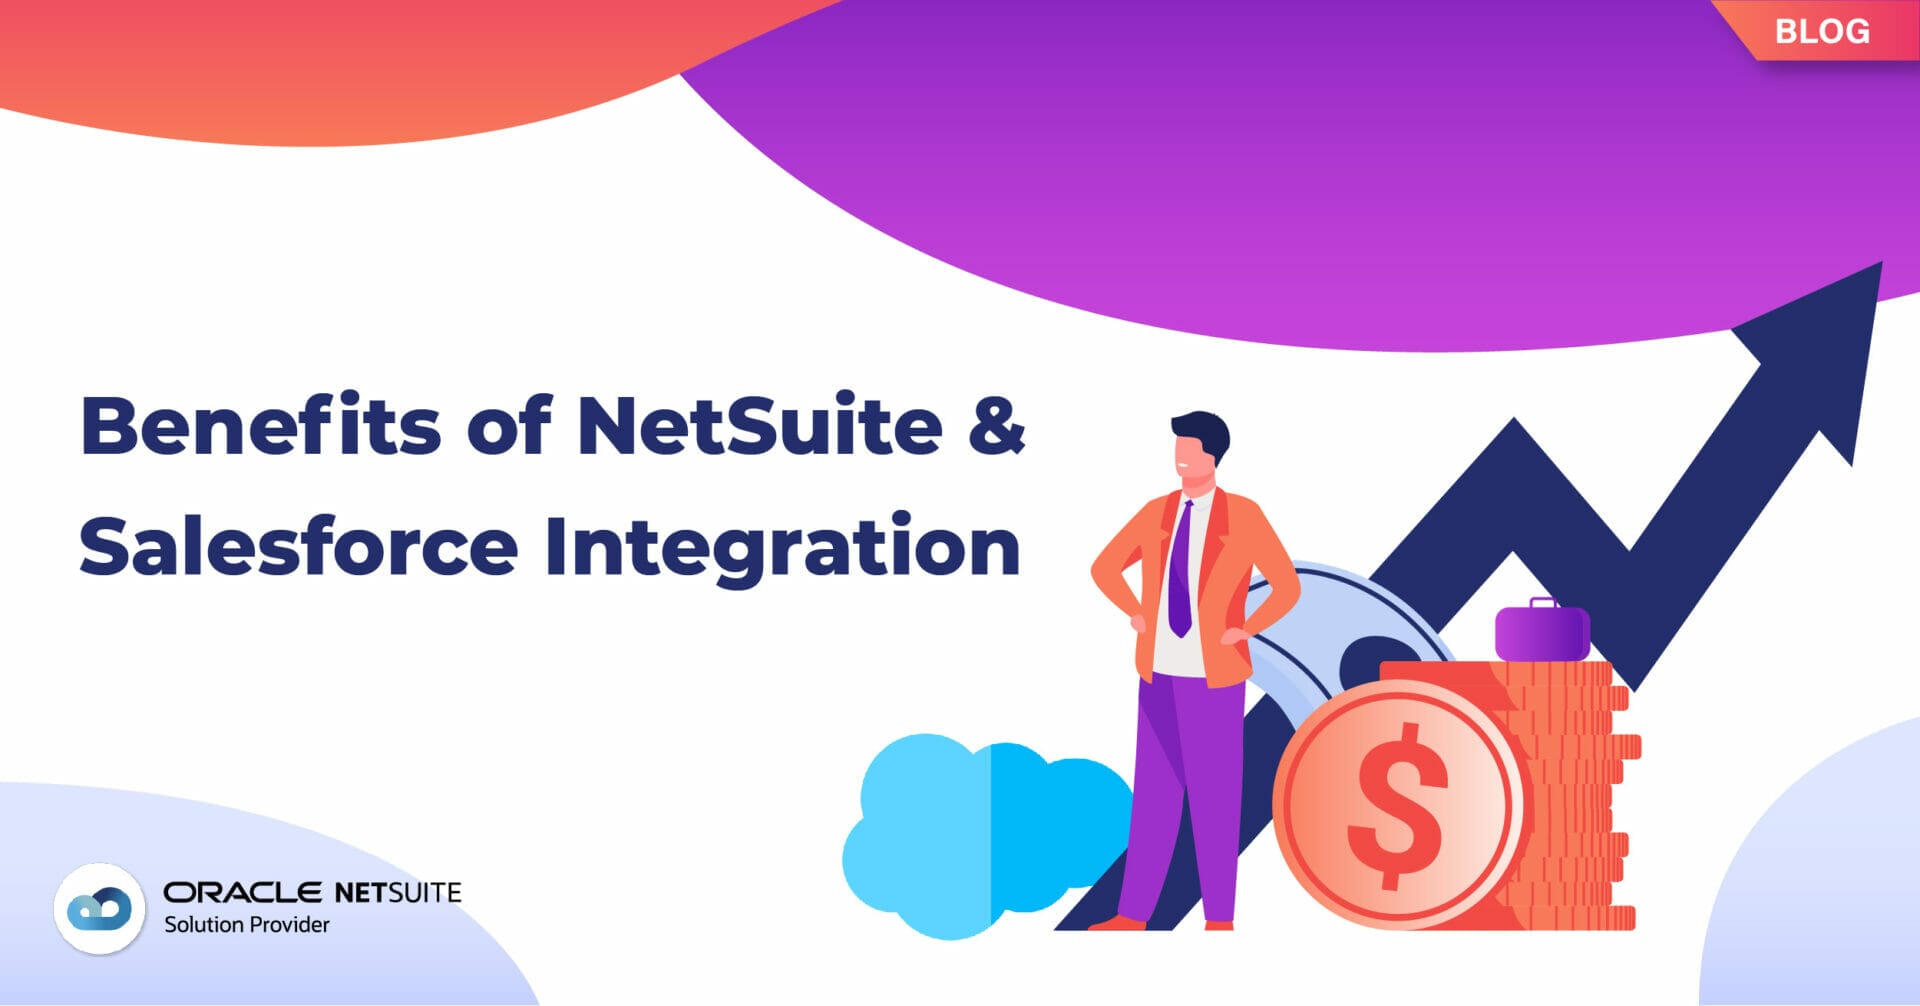 Benefits of NetSuite & Salesforce Integration